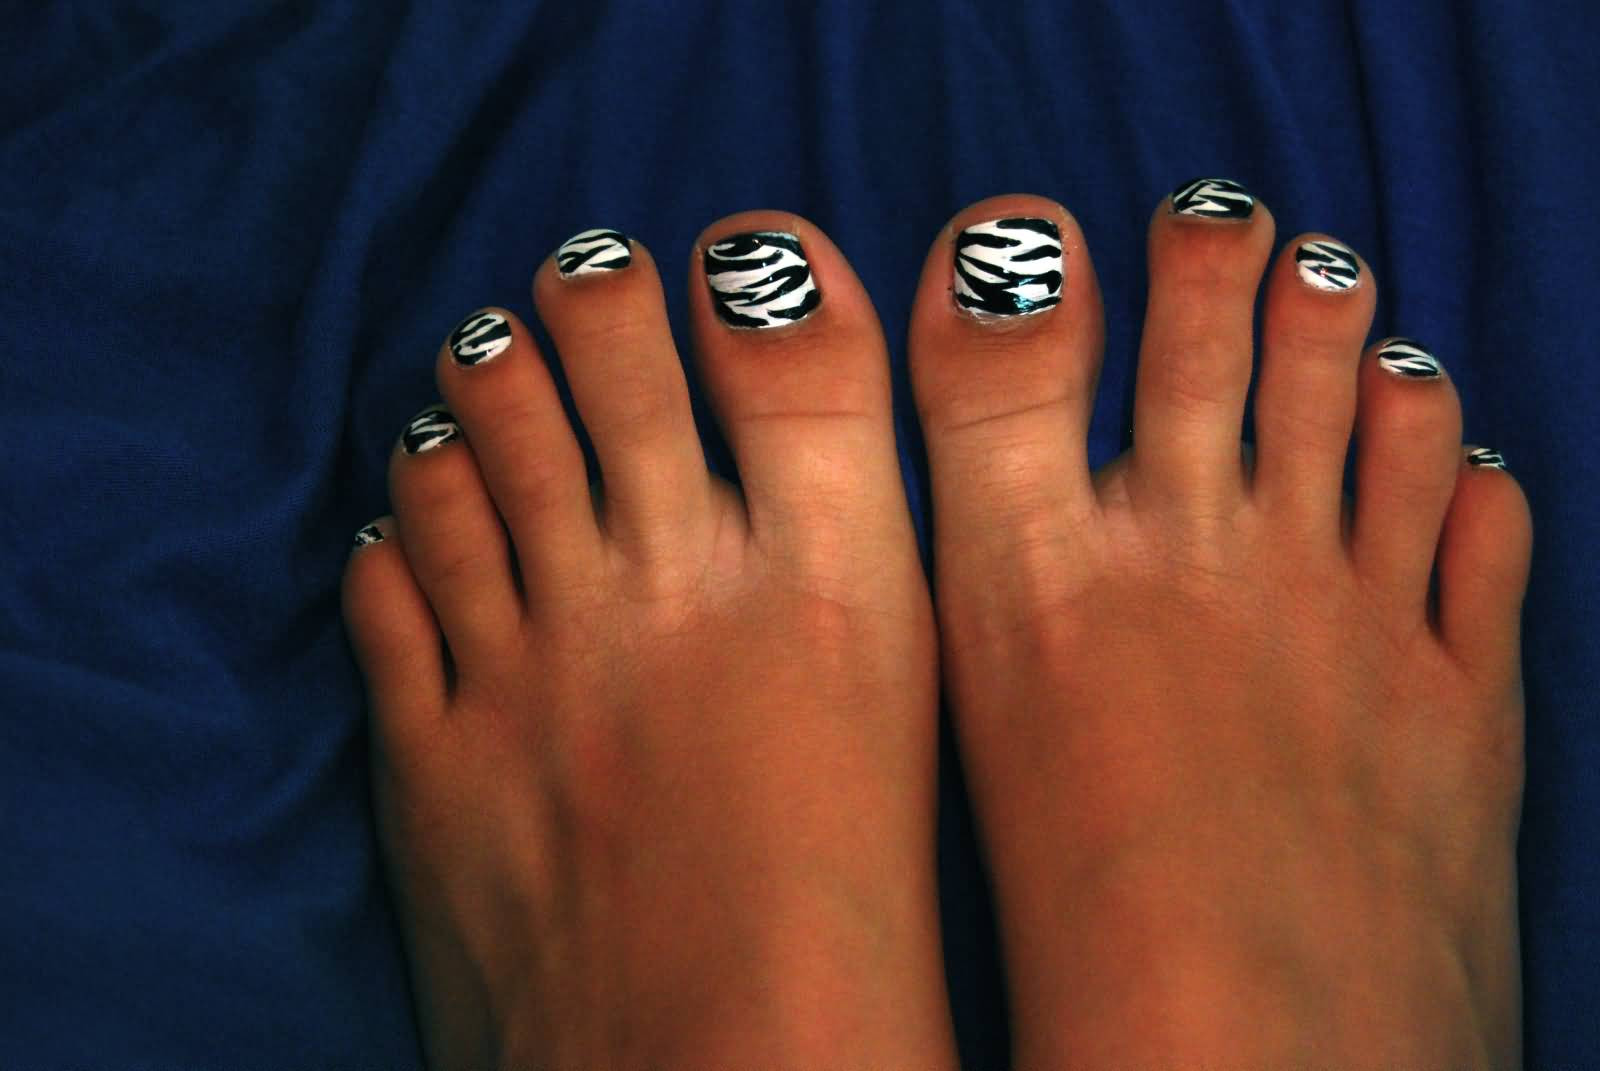 Zebra Toe Nail Designs
 60 Stylish Black And White Nail Art Designs For Toe Nails